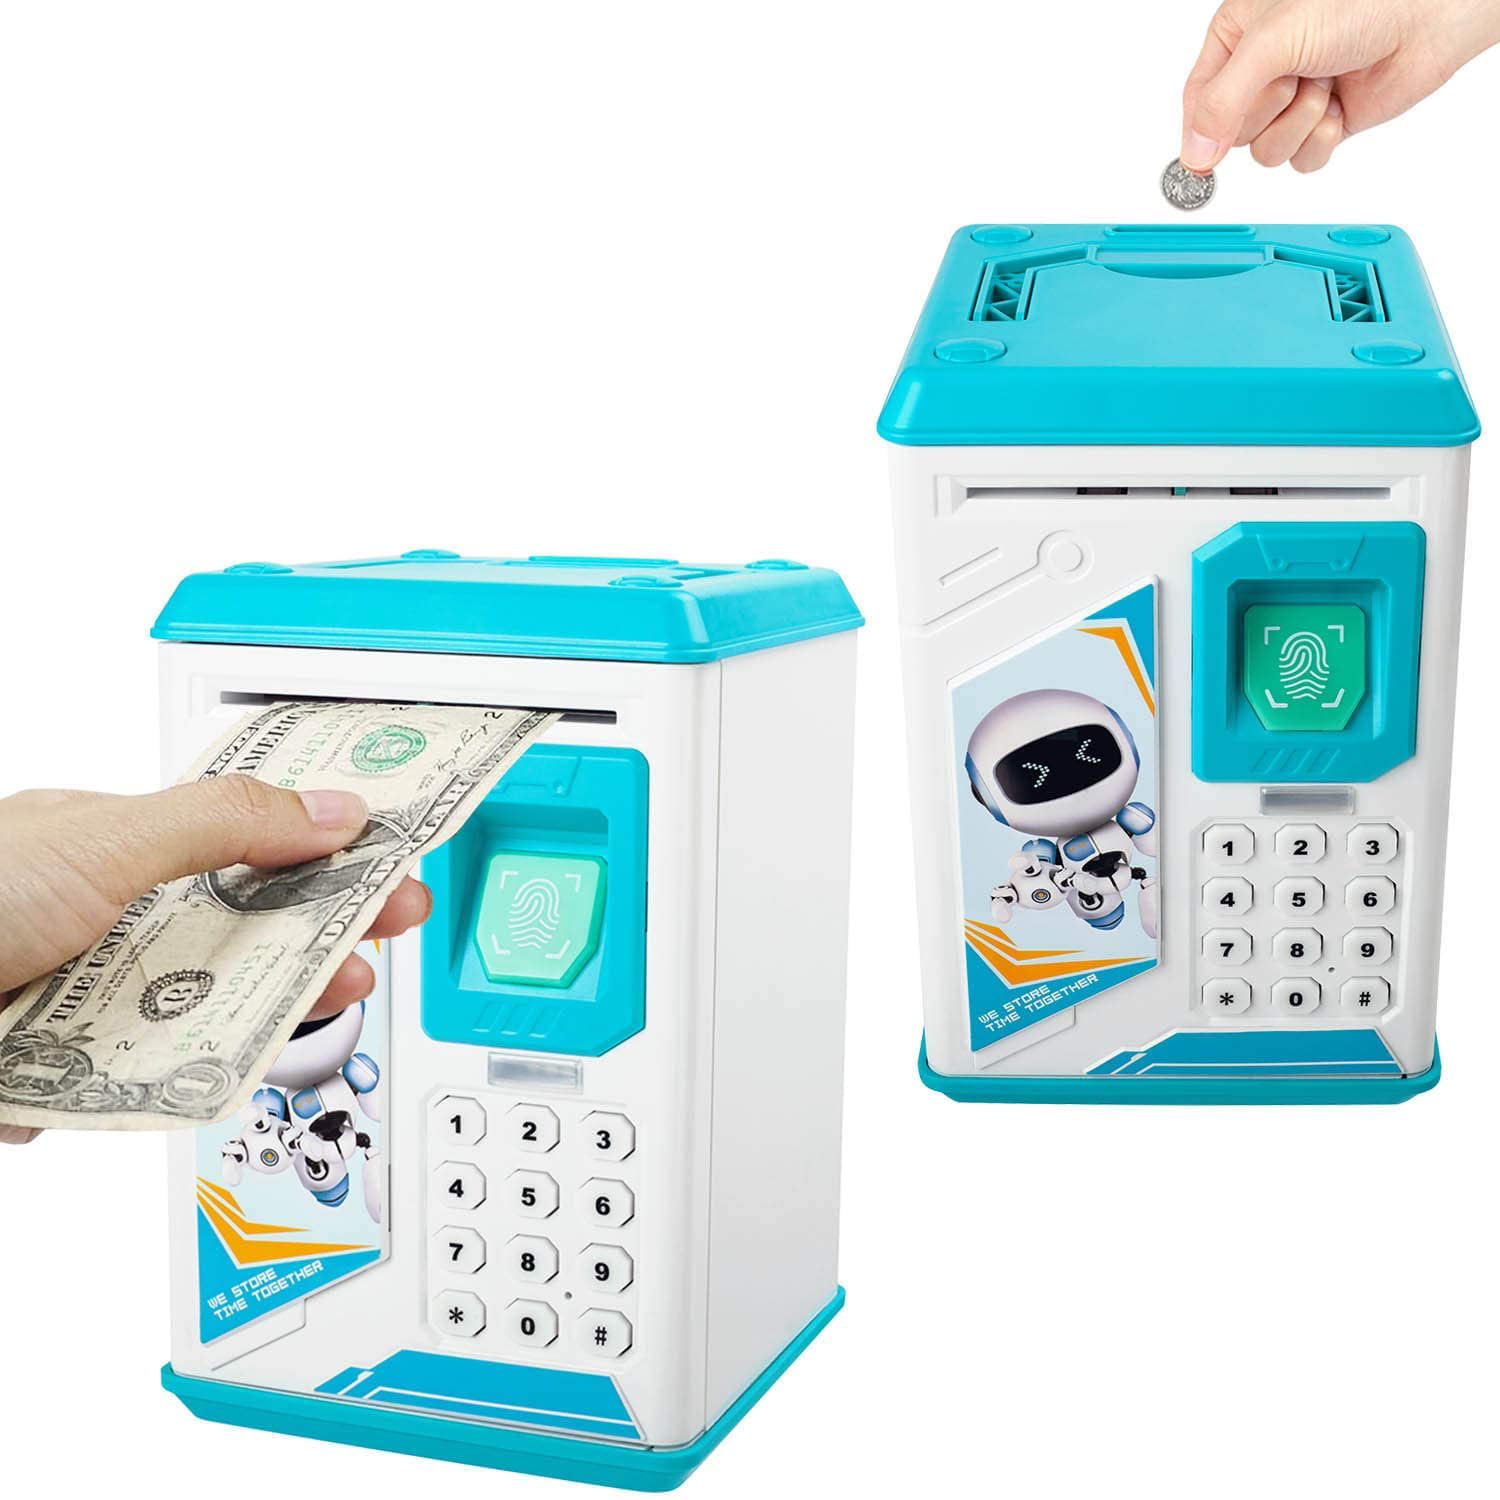 Toy Piggy Bank Safe Box Fingerprint ATM Bank Savings Bank 